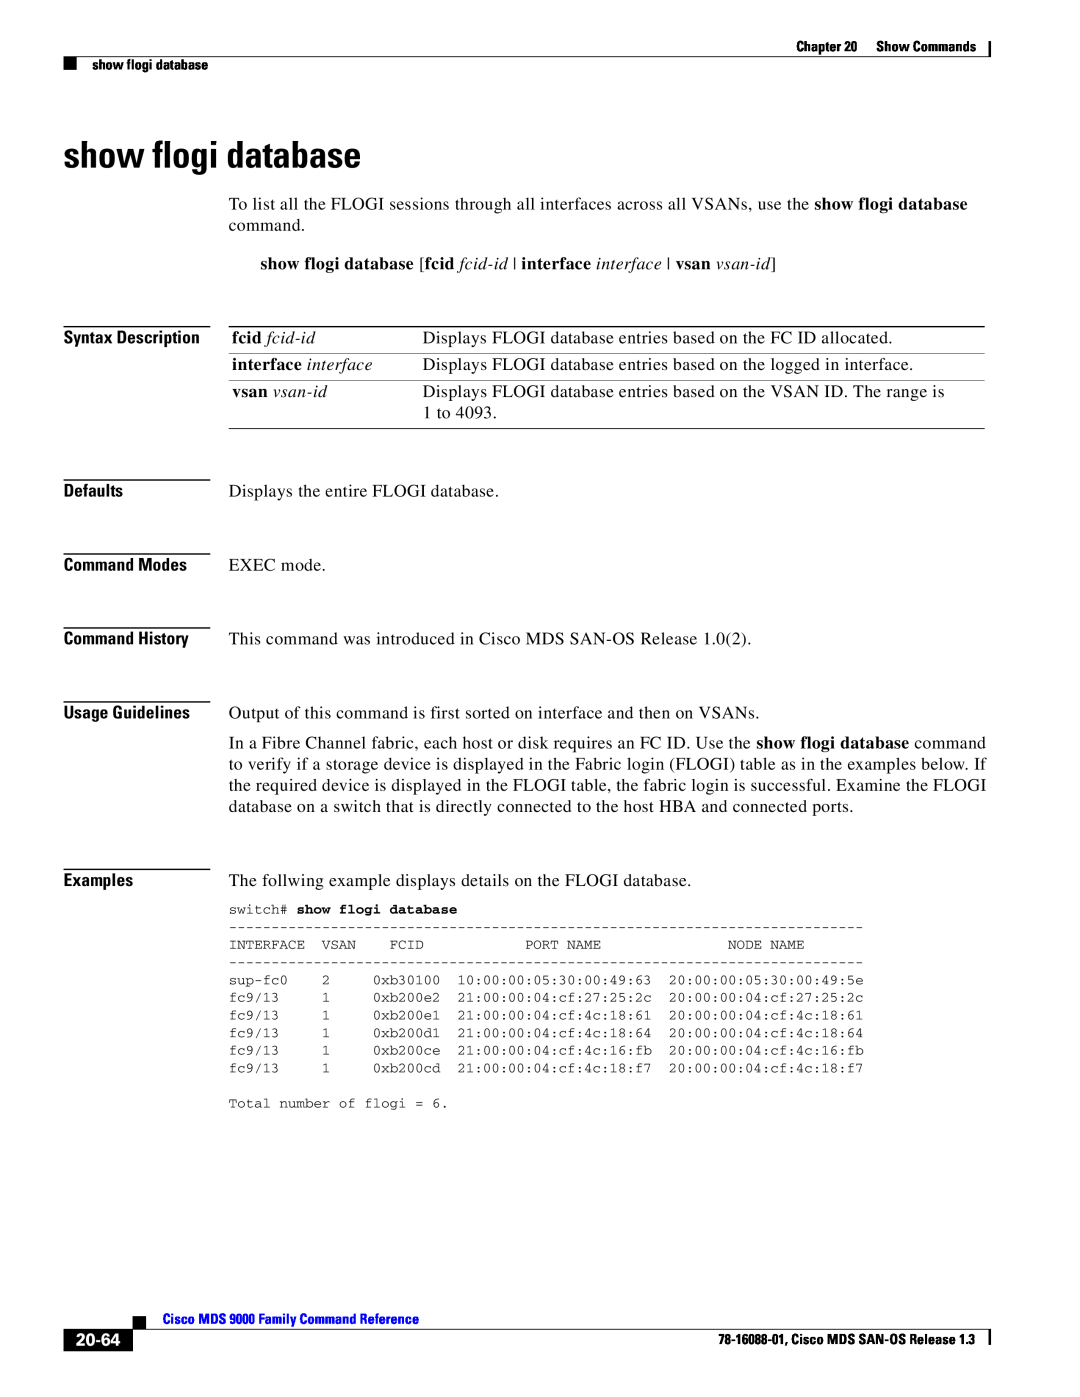 Cisco Systems MDS 9000 show flogi database fcid fcid-id interface interface vsan vsan-id, Syntax Description, 1 to 